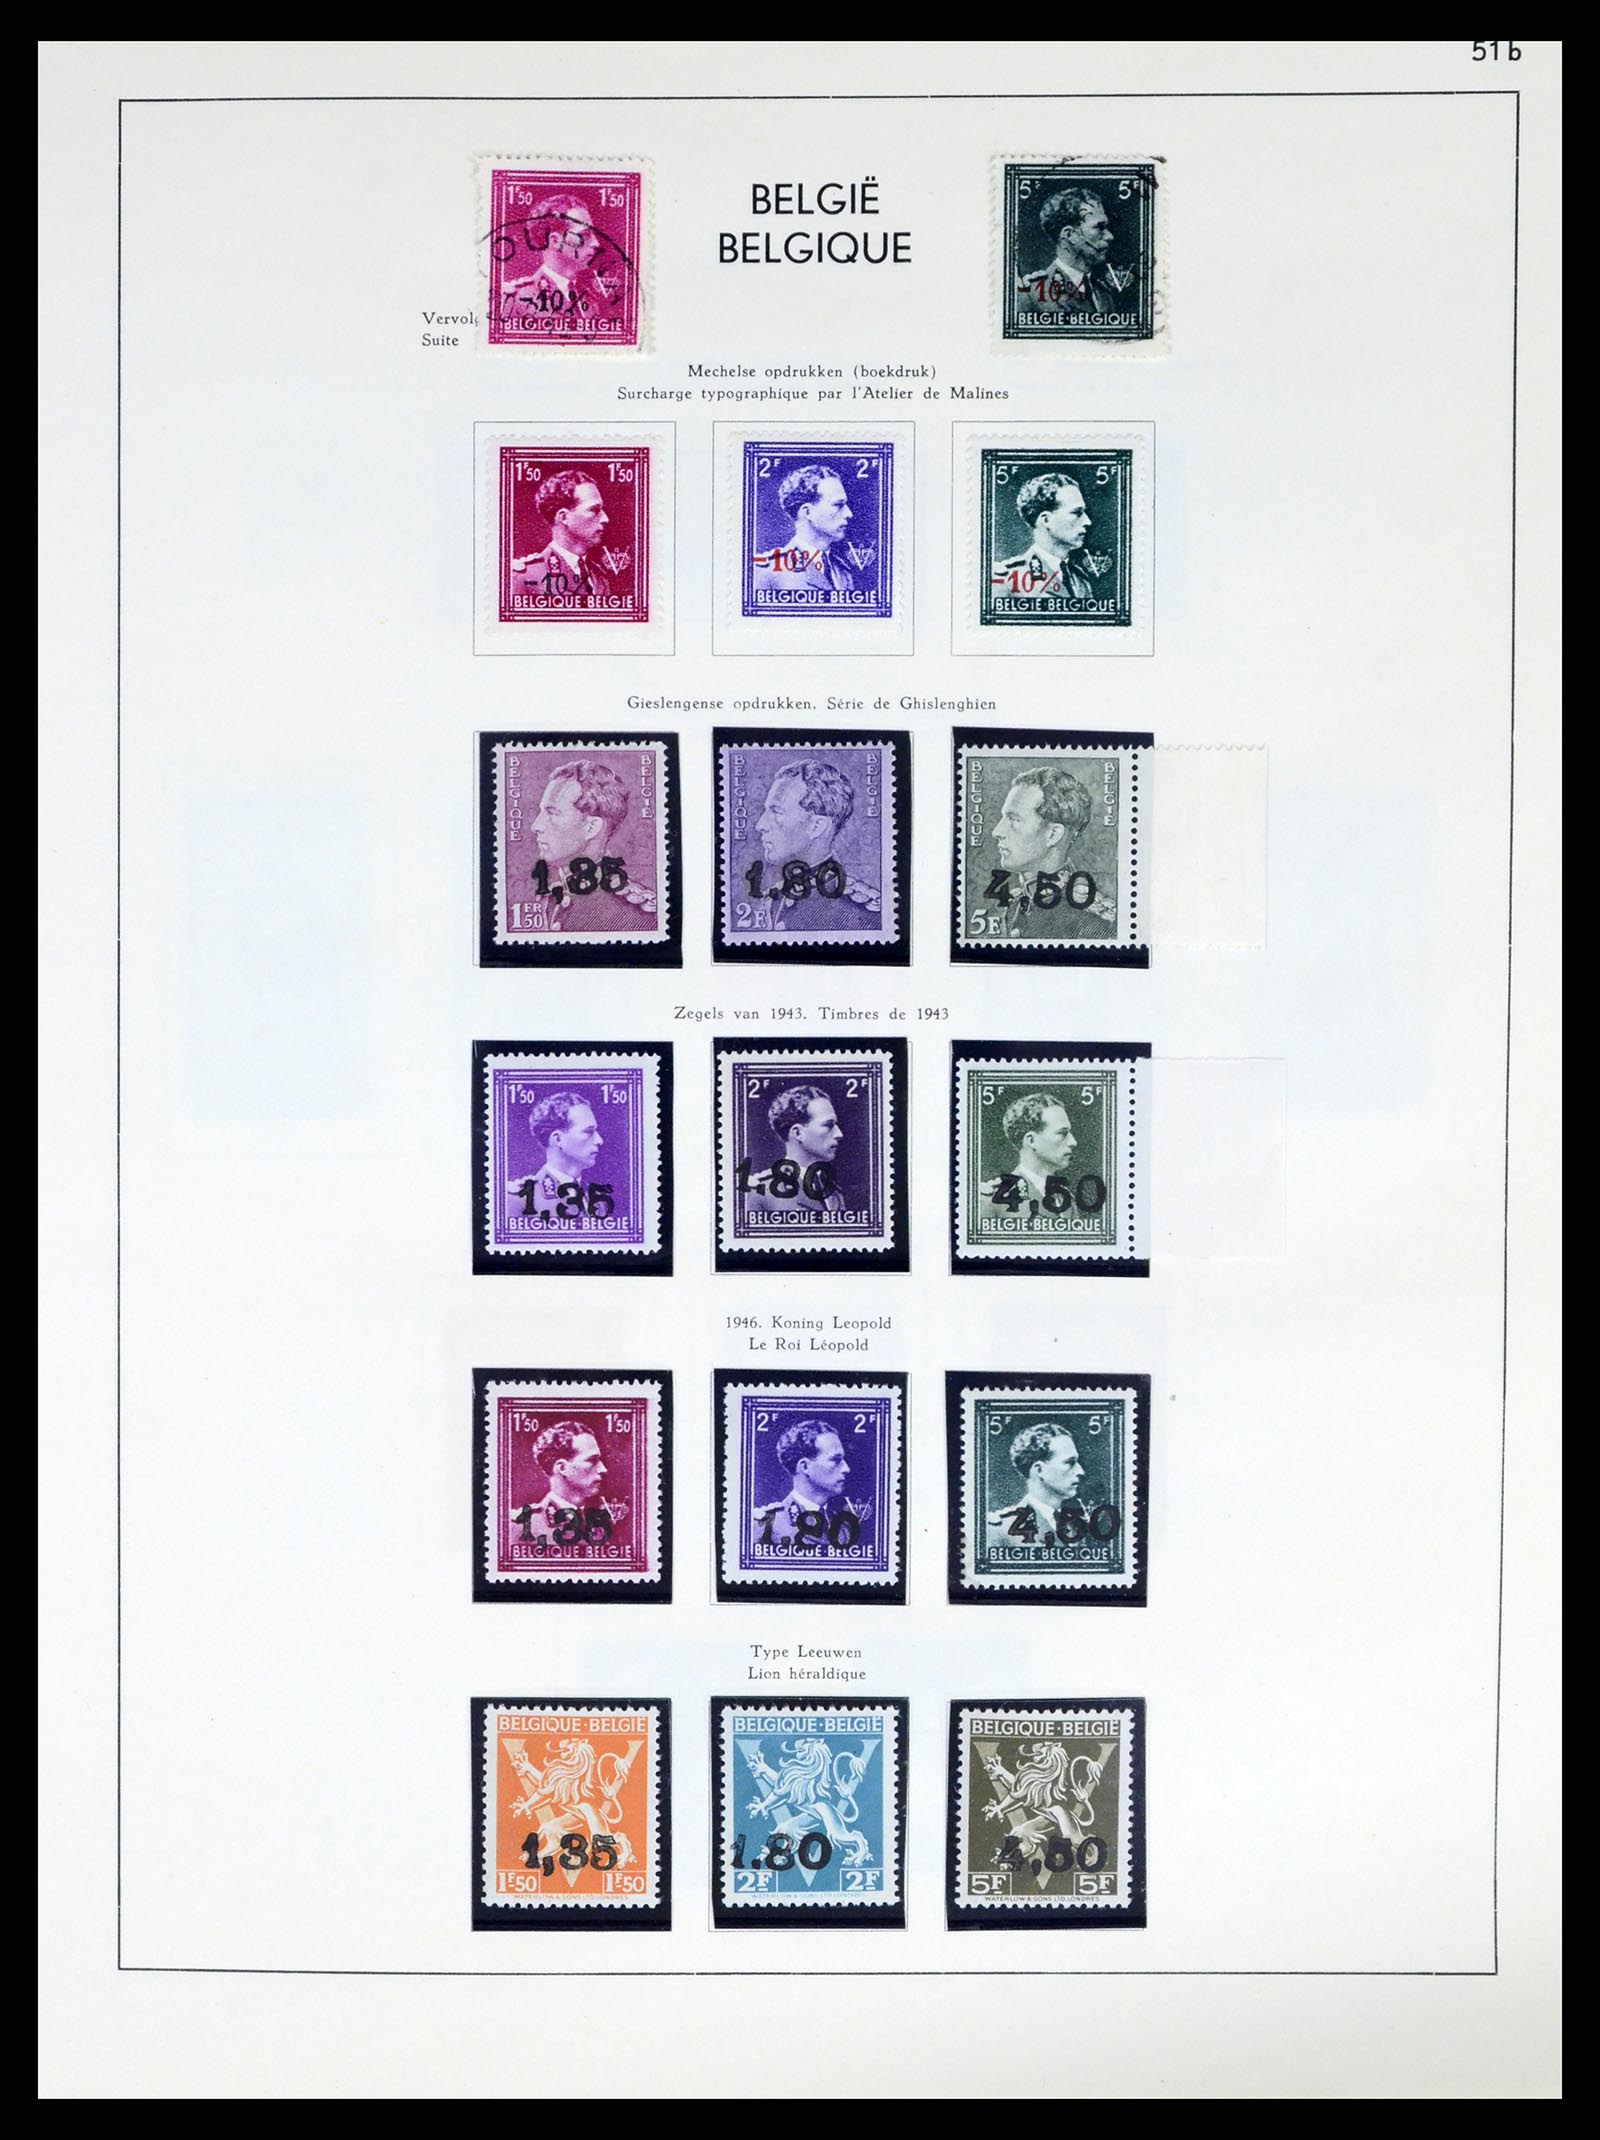 37959 071 - Stamp Collection 37959 Belgium and Belgian Congo 1849-1960.